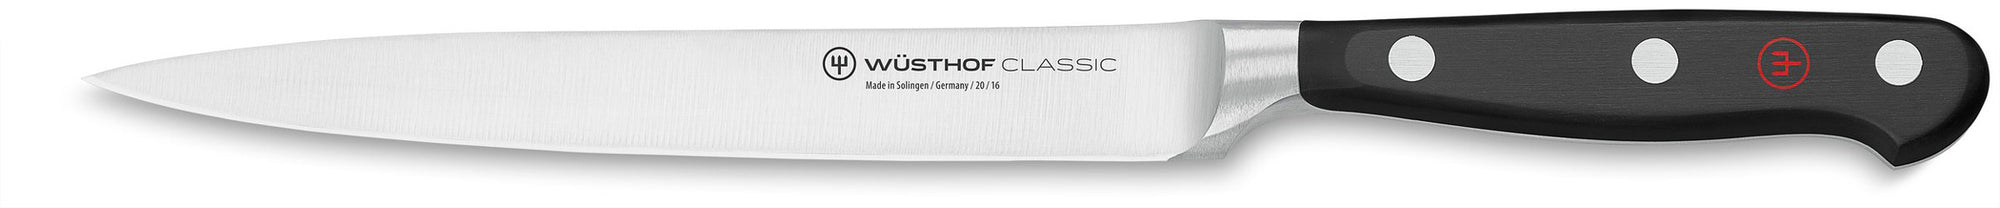 Wusthof Classic 8-inch flexible fish fillet knife 4518-20 Canada